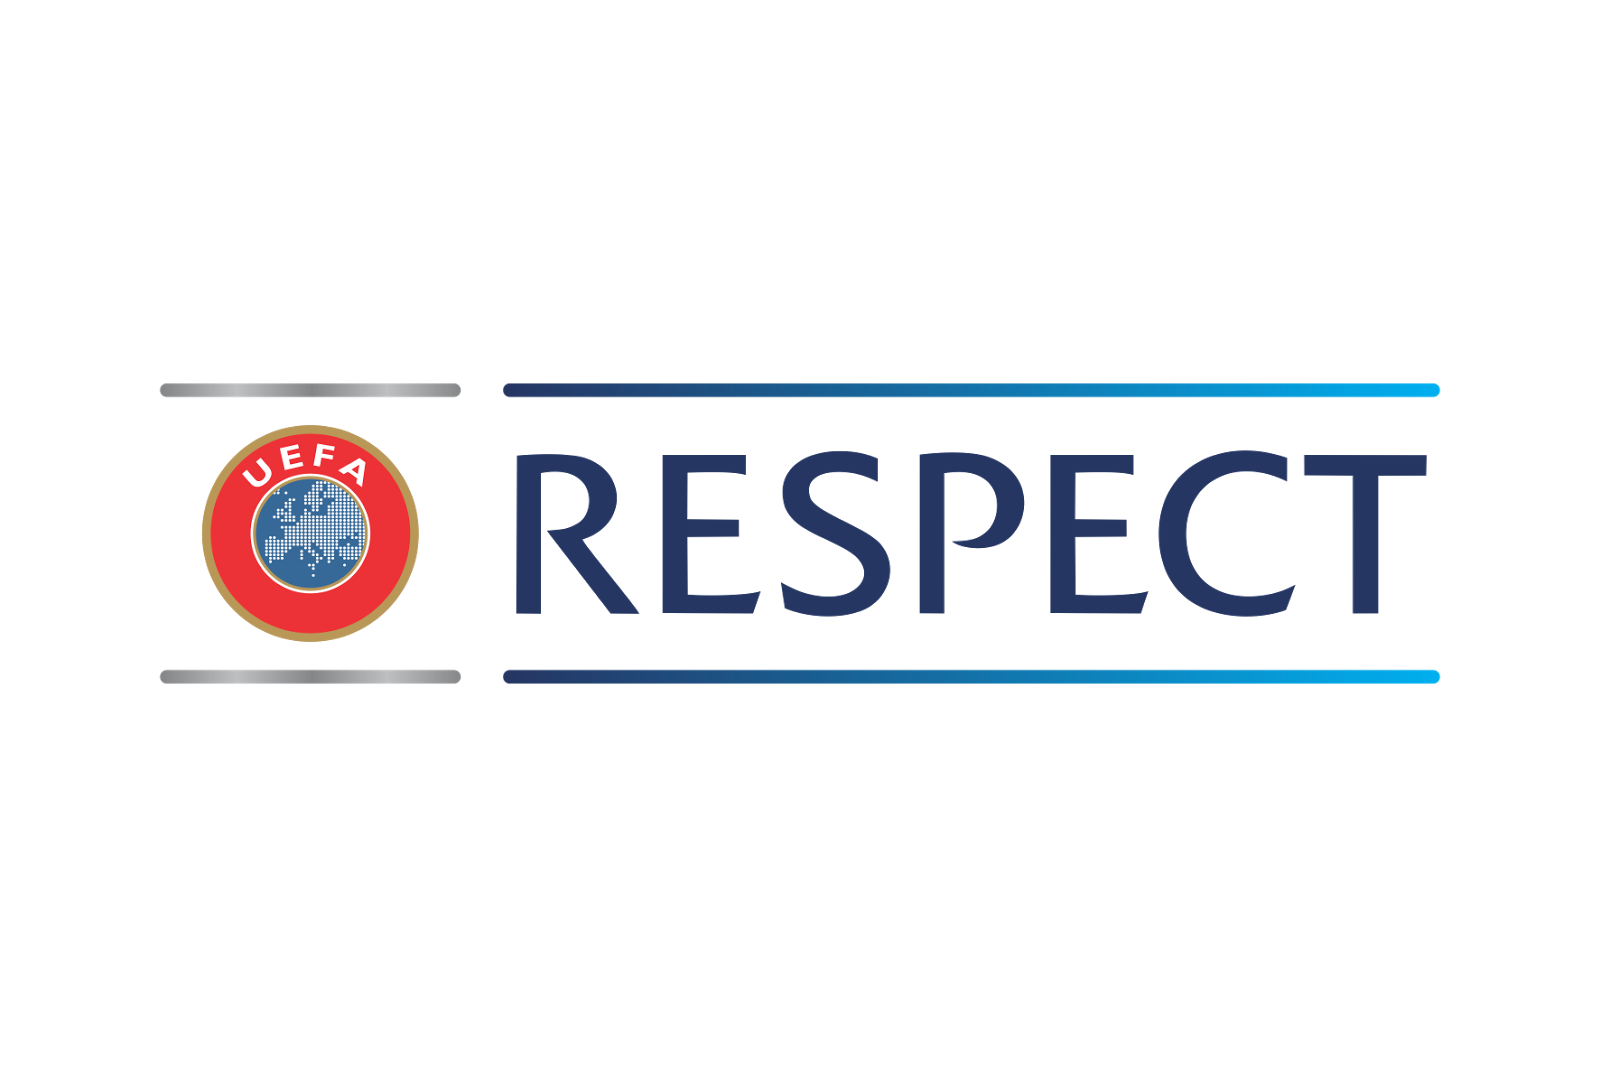 UEFA Europa League 2016 Logo 